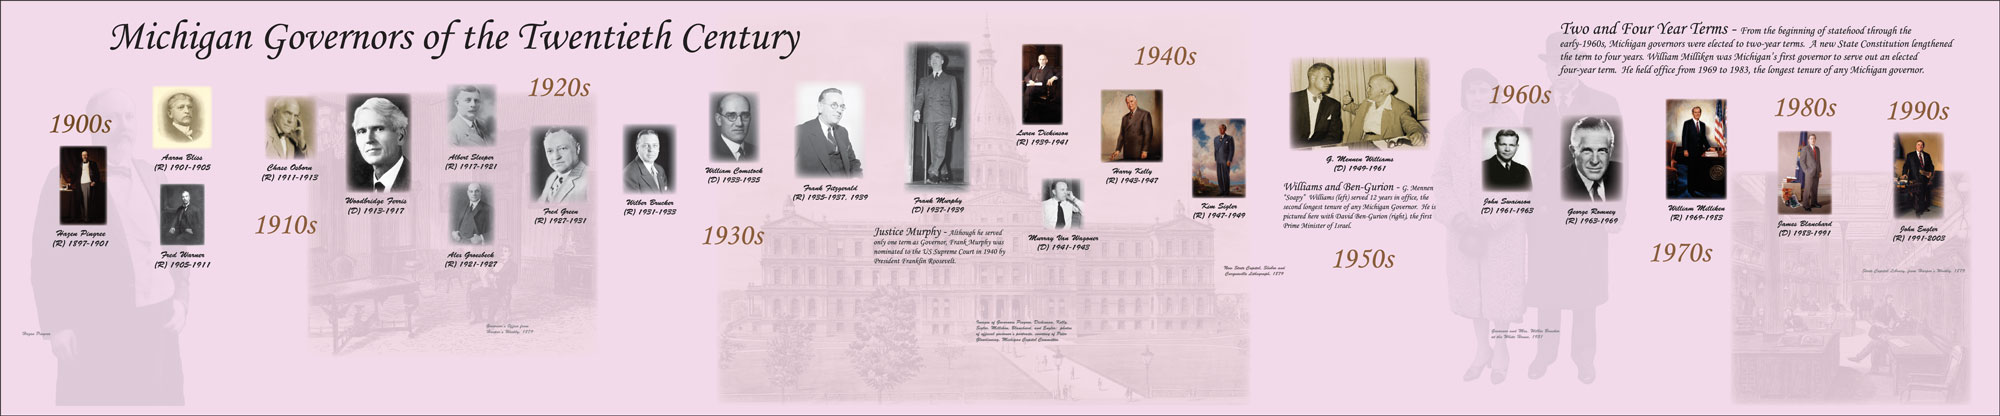 Michigan Governors of the Twentieth Century